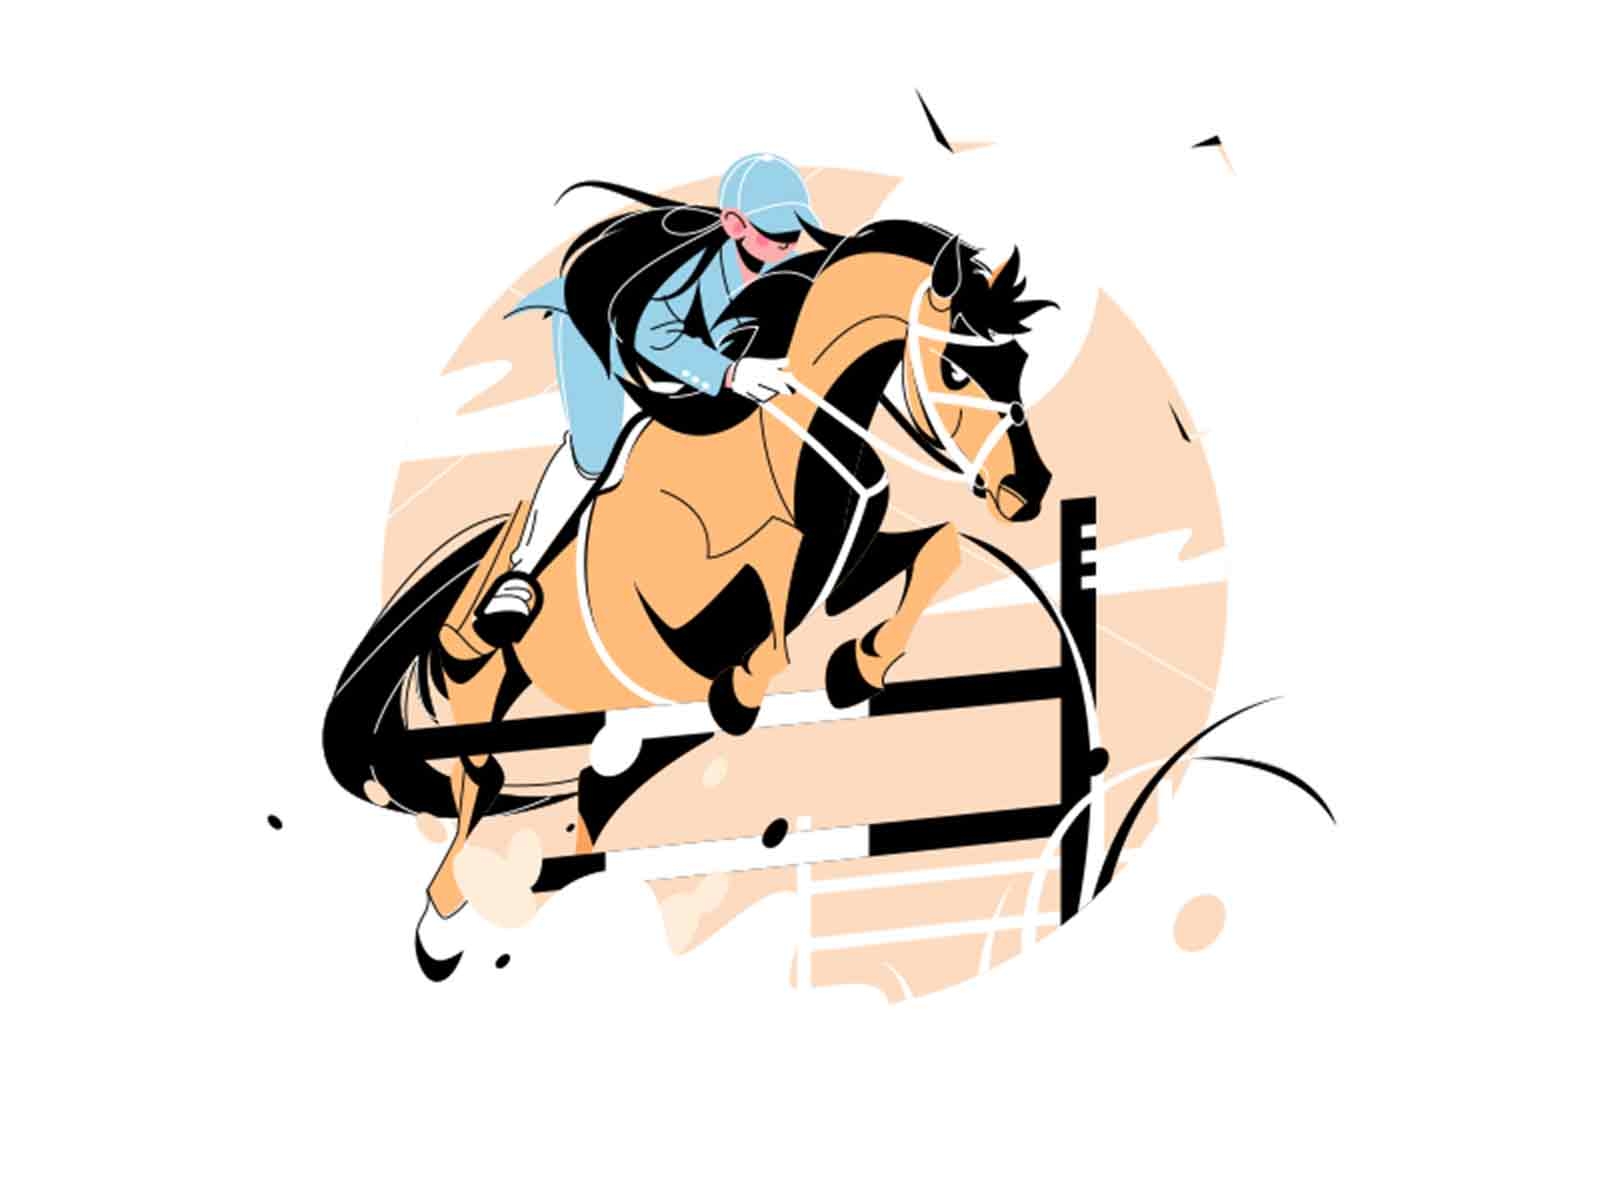 Woman jockey riding horse by Kit8 on Dribbble